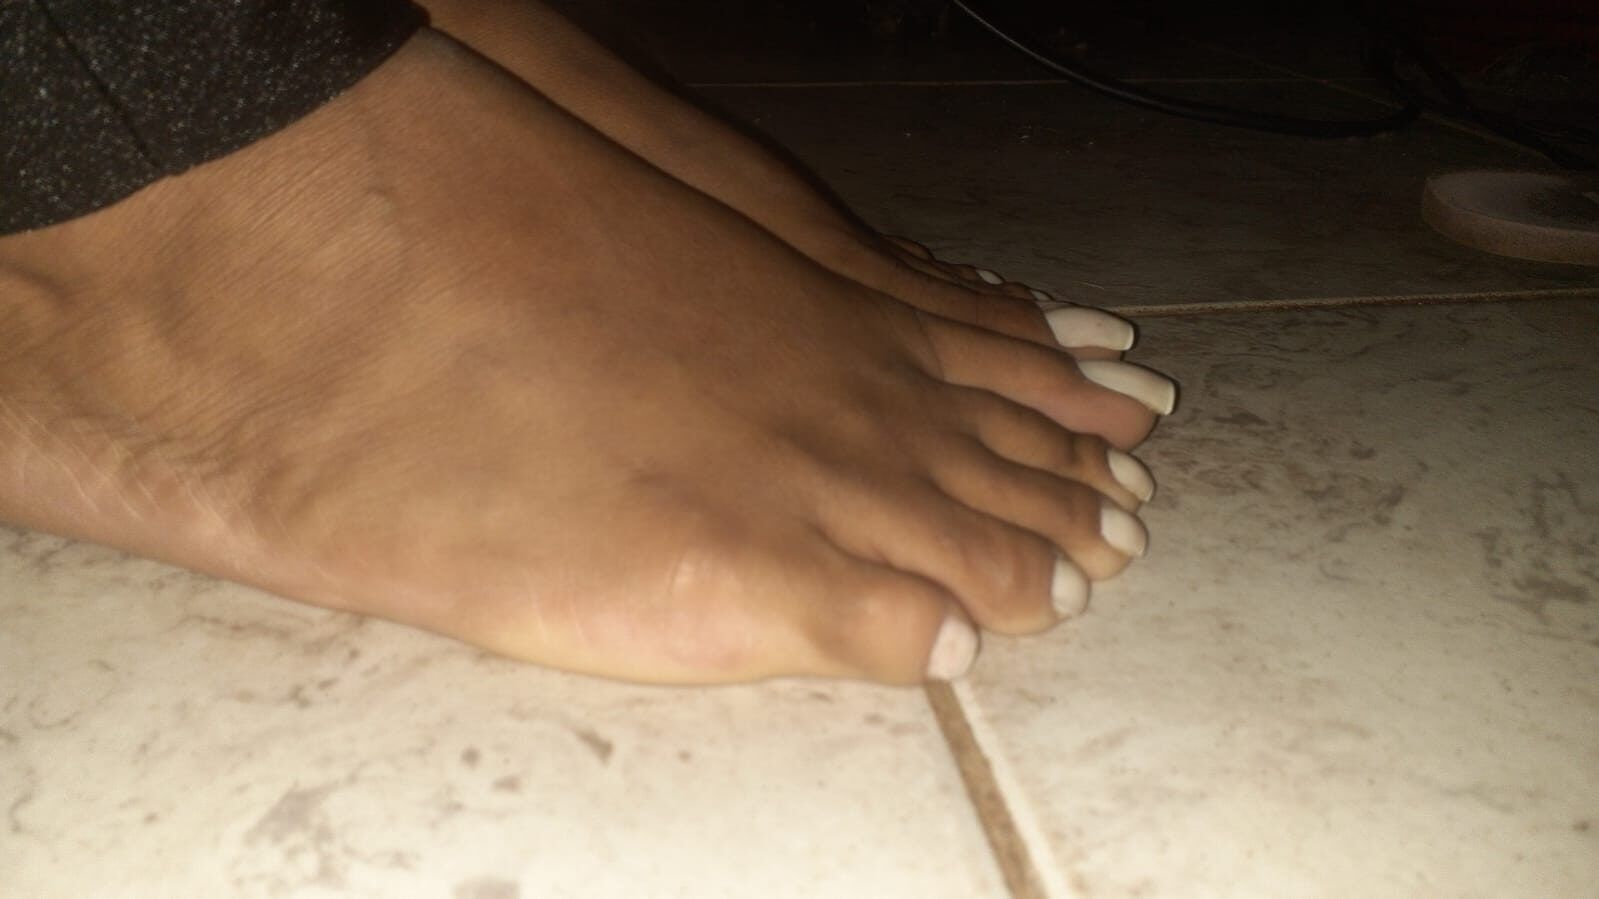 My feet #12